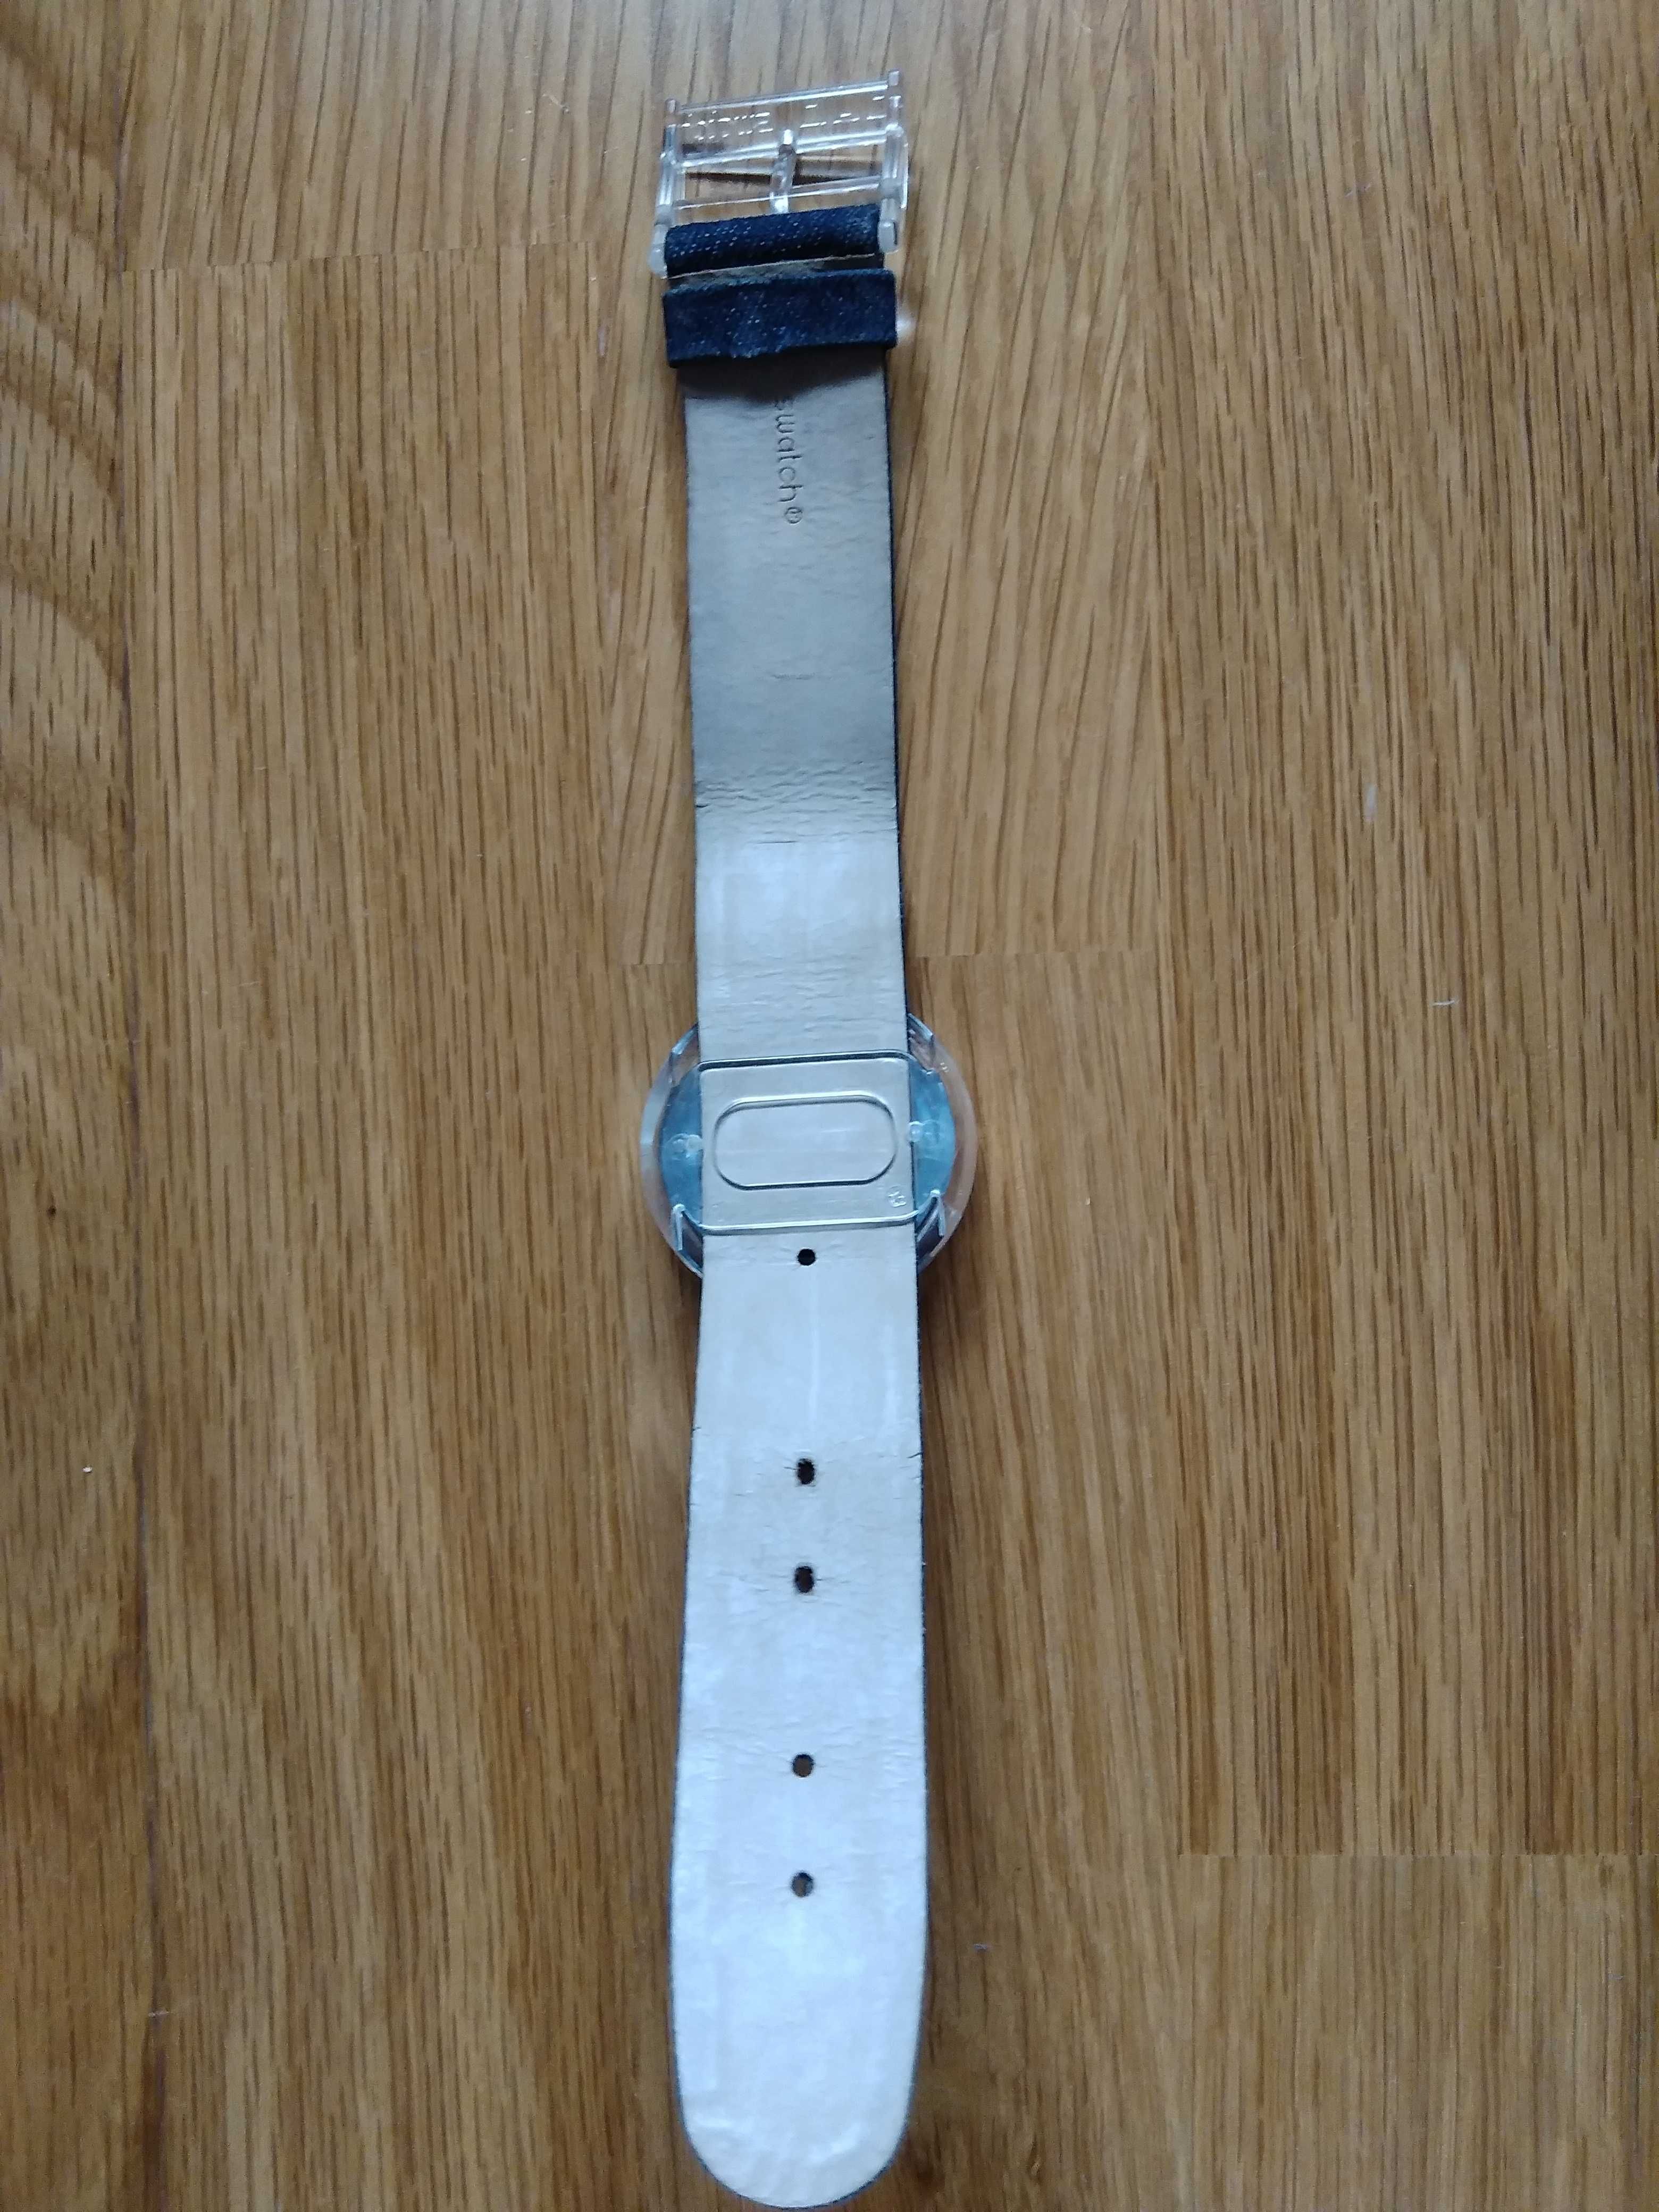 Relógio Swatch para colecionador